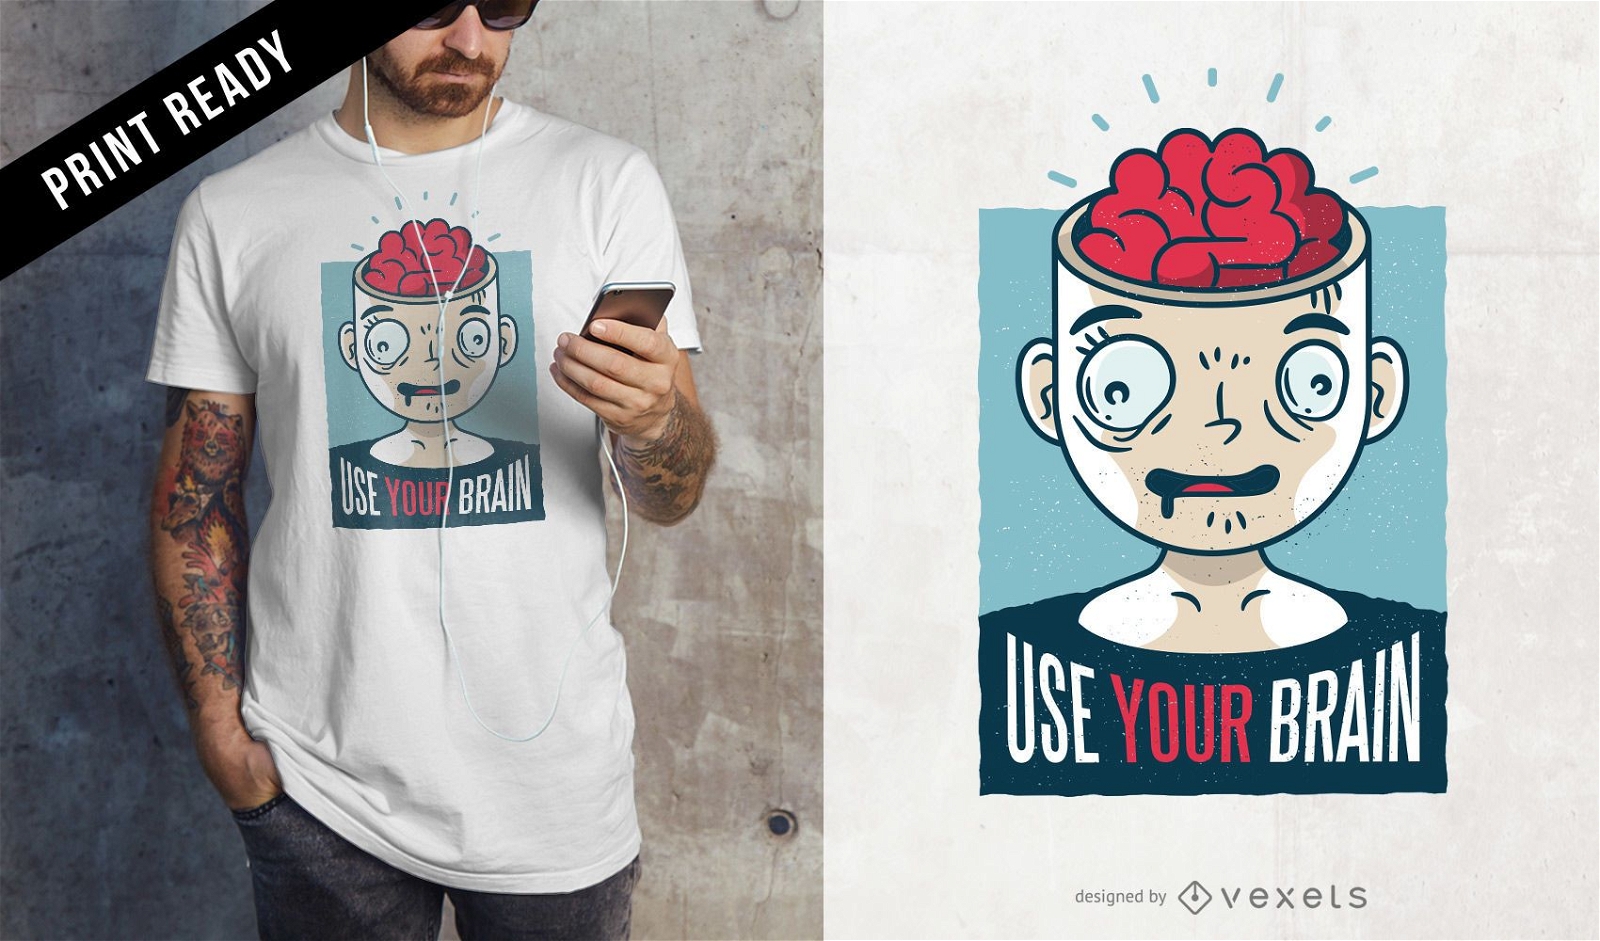 Use your brain t-shirt design